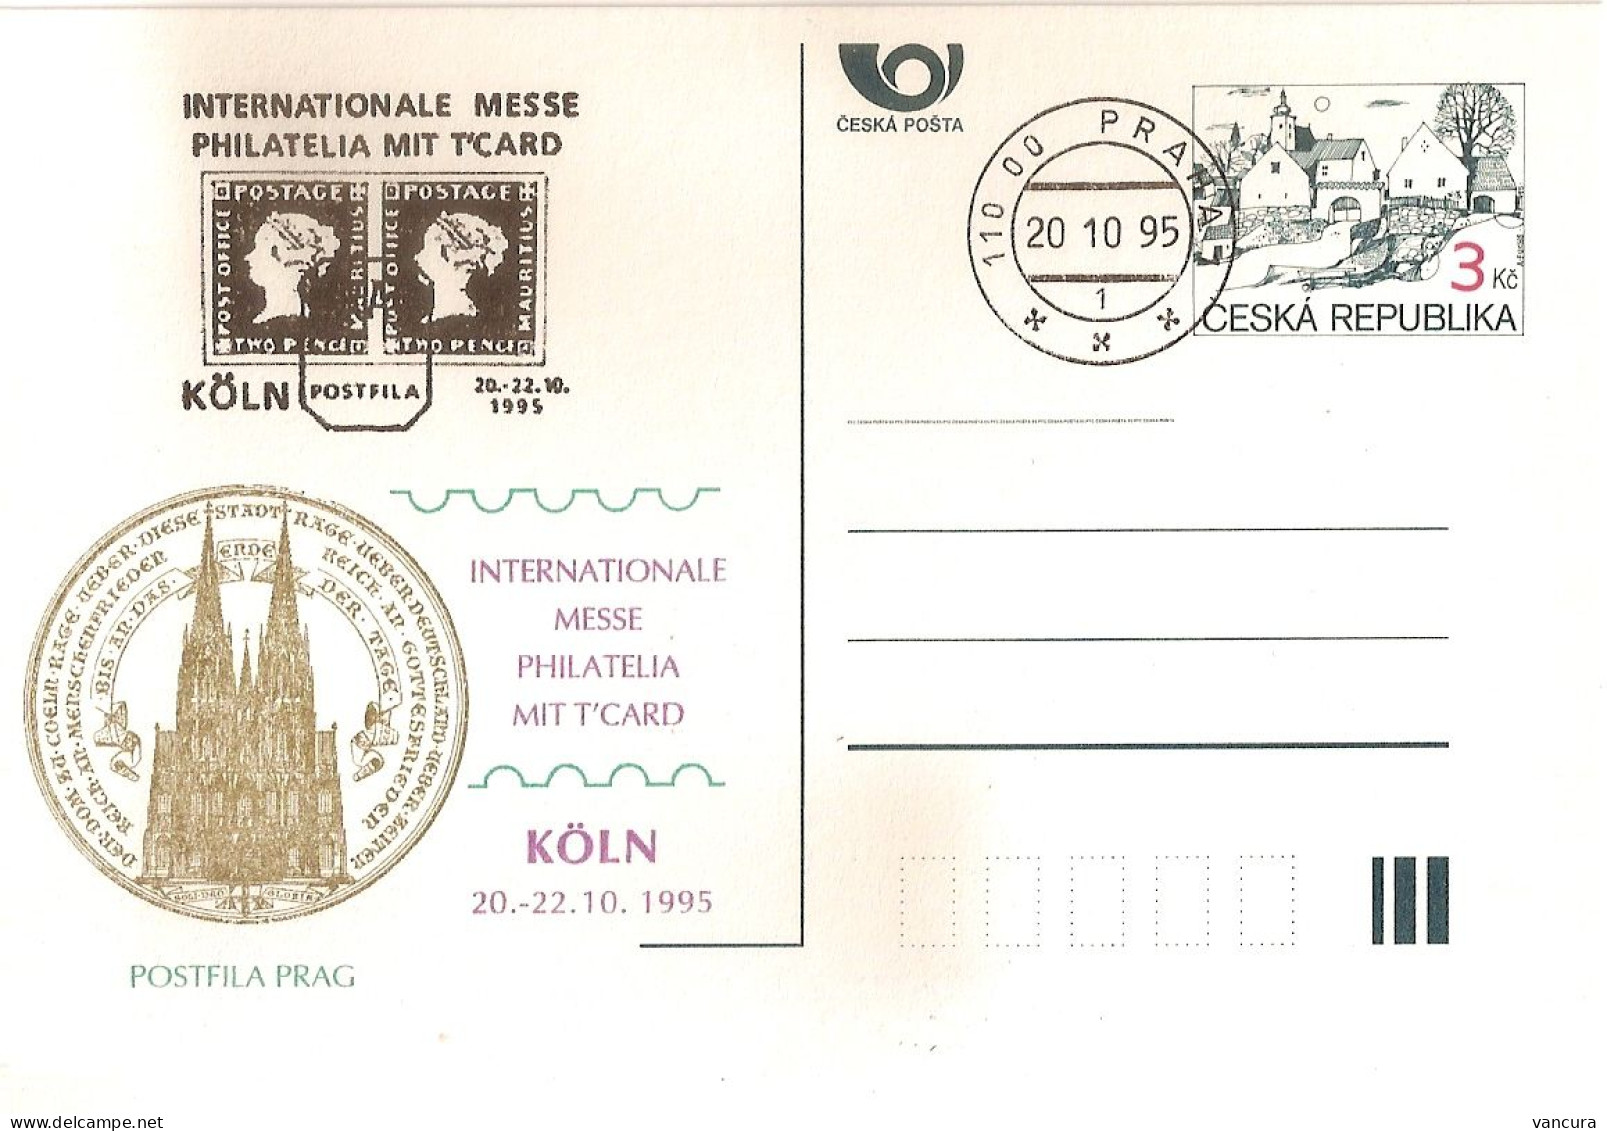 CDV A 10 Czech Republic Köln 1995 NOTICE POOR SCAN, BUT THE CARD IS PERFECT! Pennyblack - Ansichtskarten